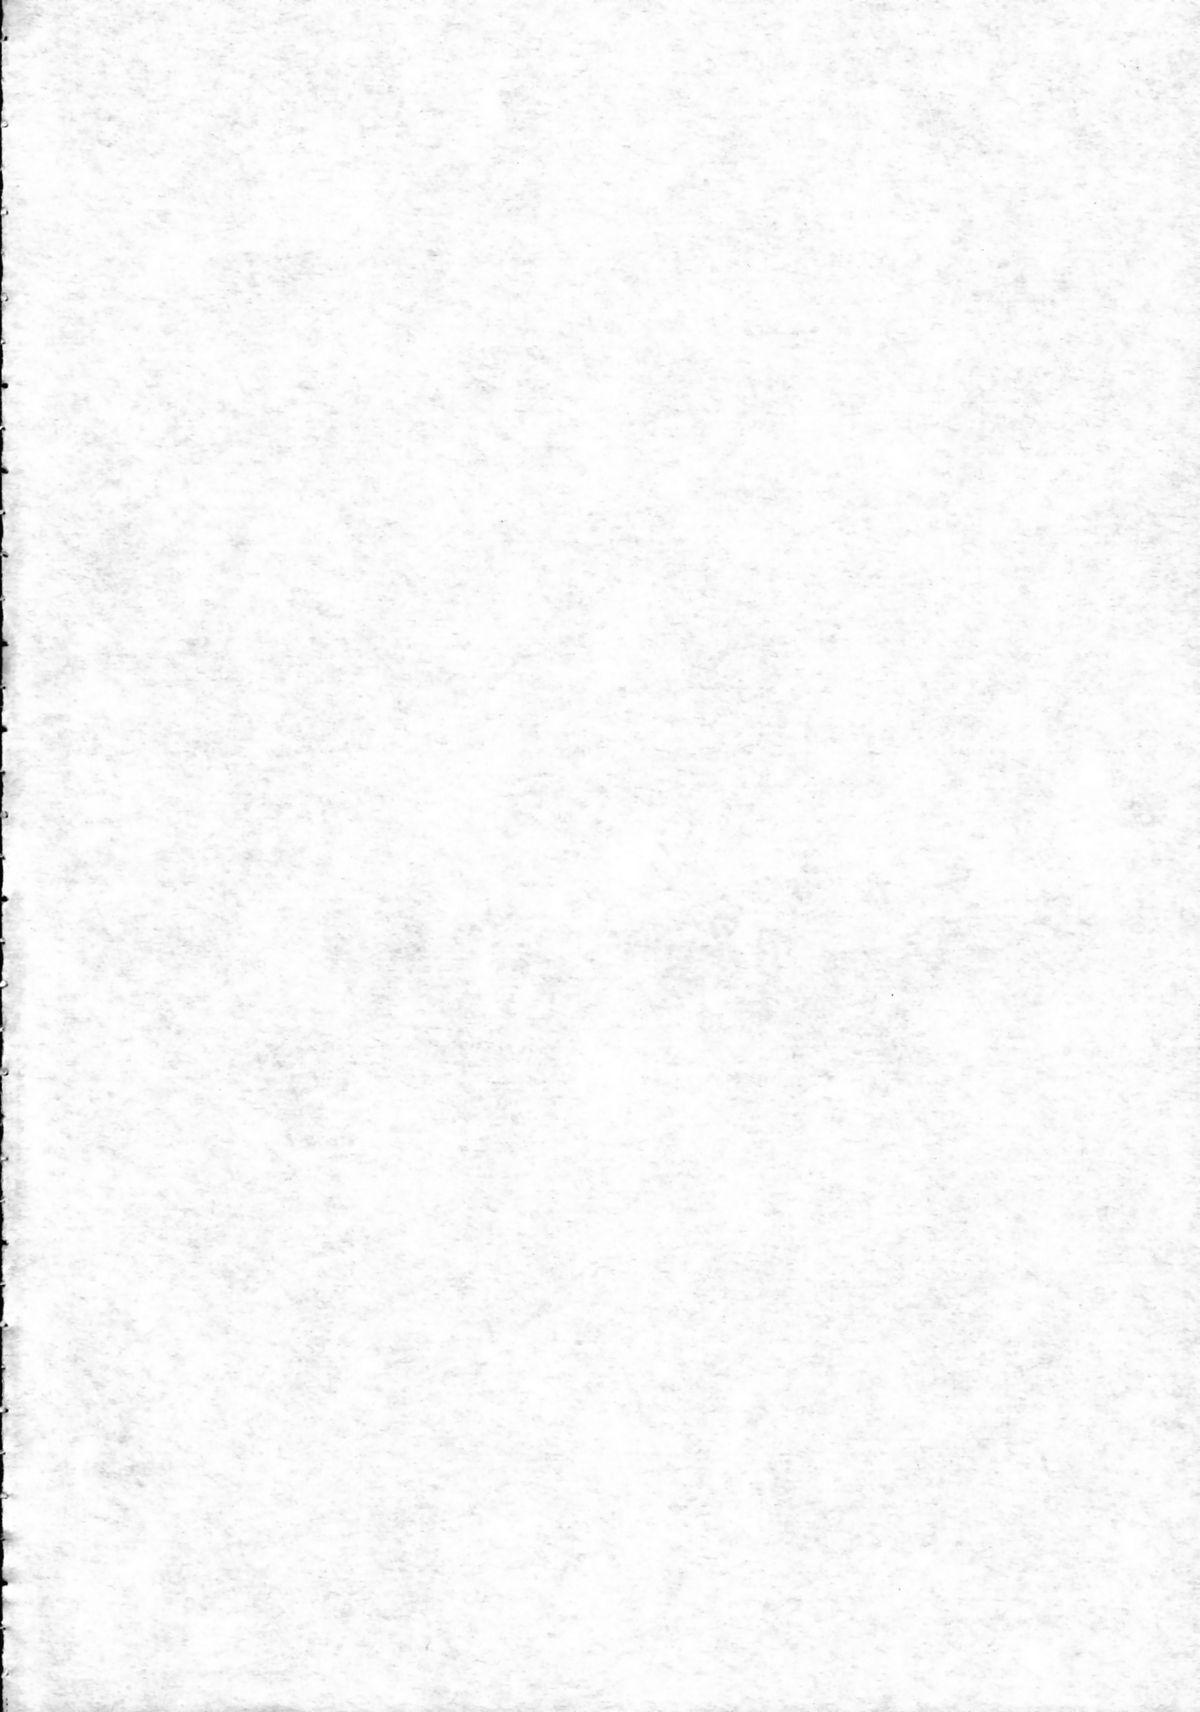 Pauzudo PLUMATION 0606 - Toheart2 Chacal - Page 3